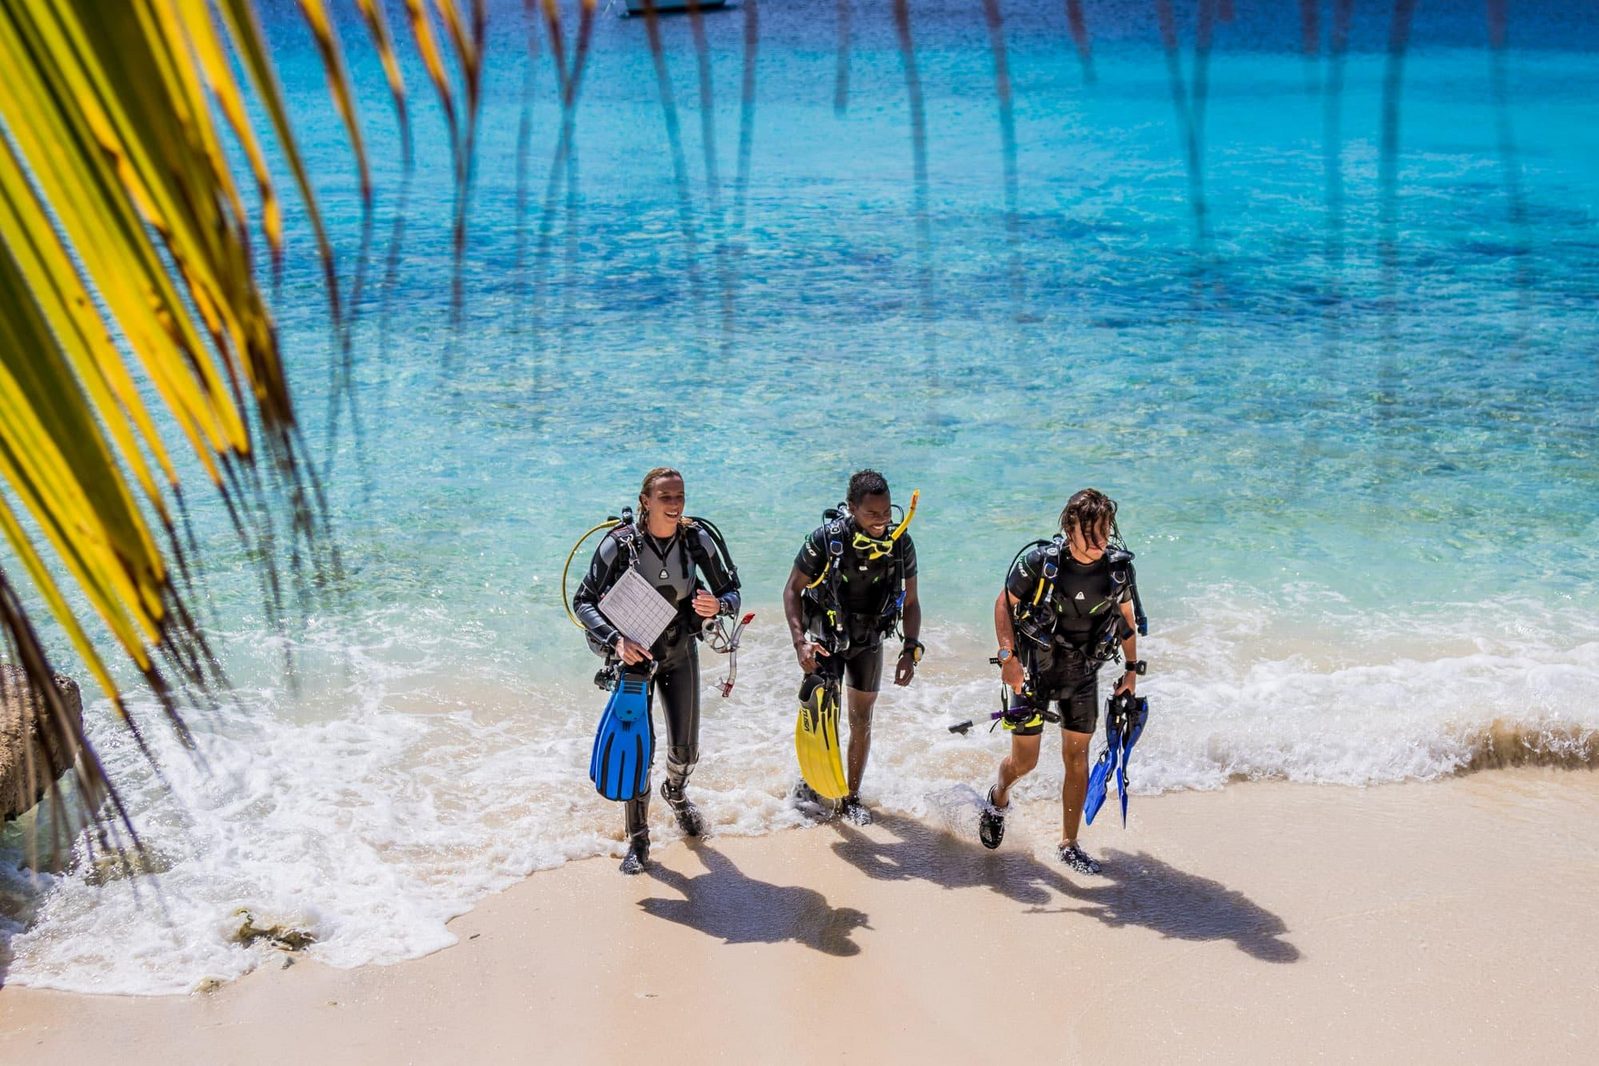 Water sports on Bonaire